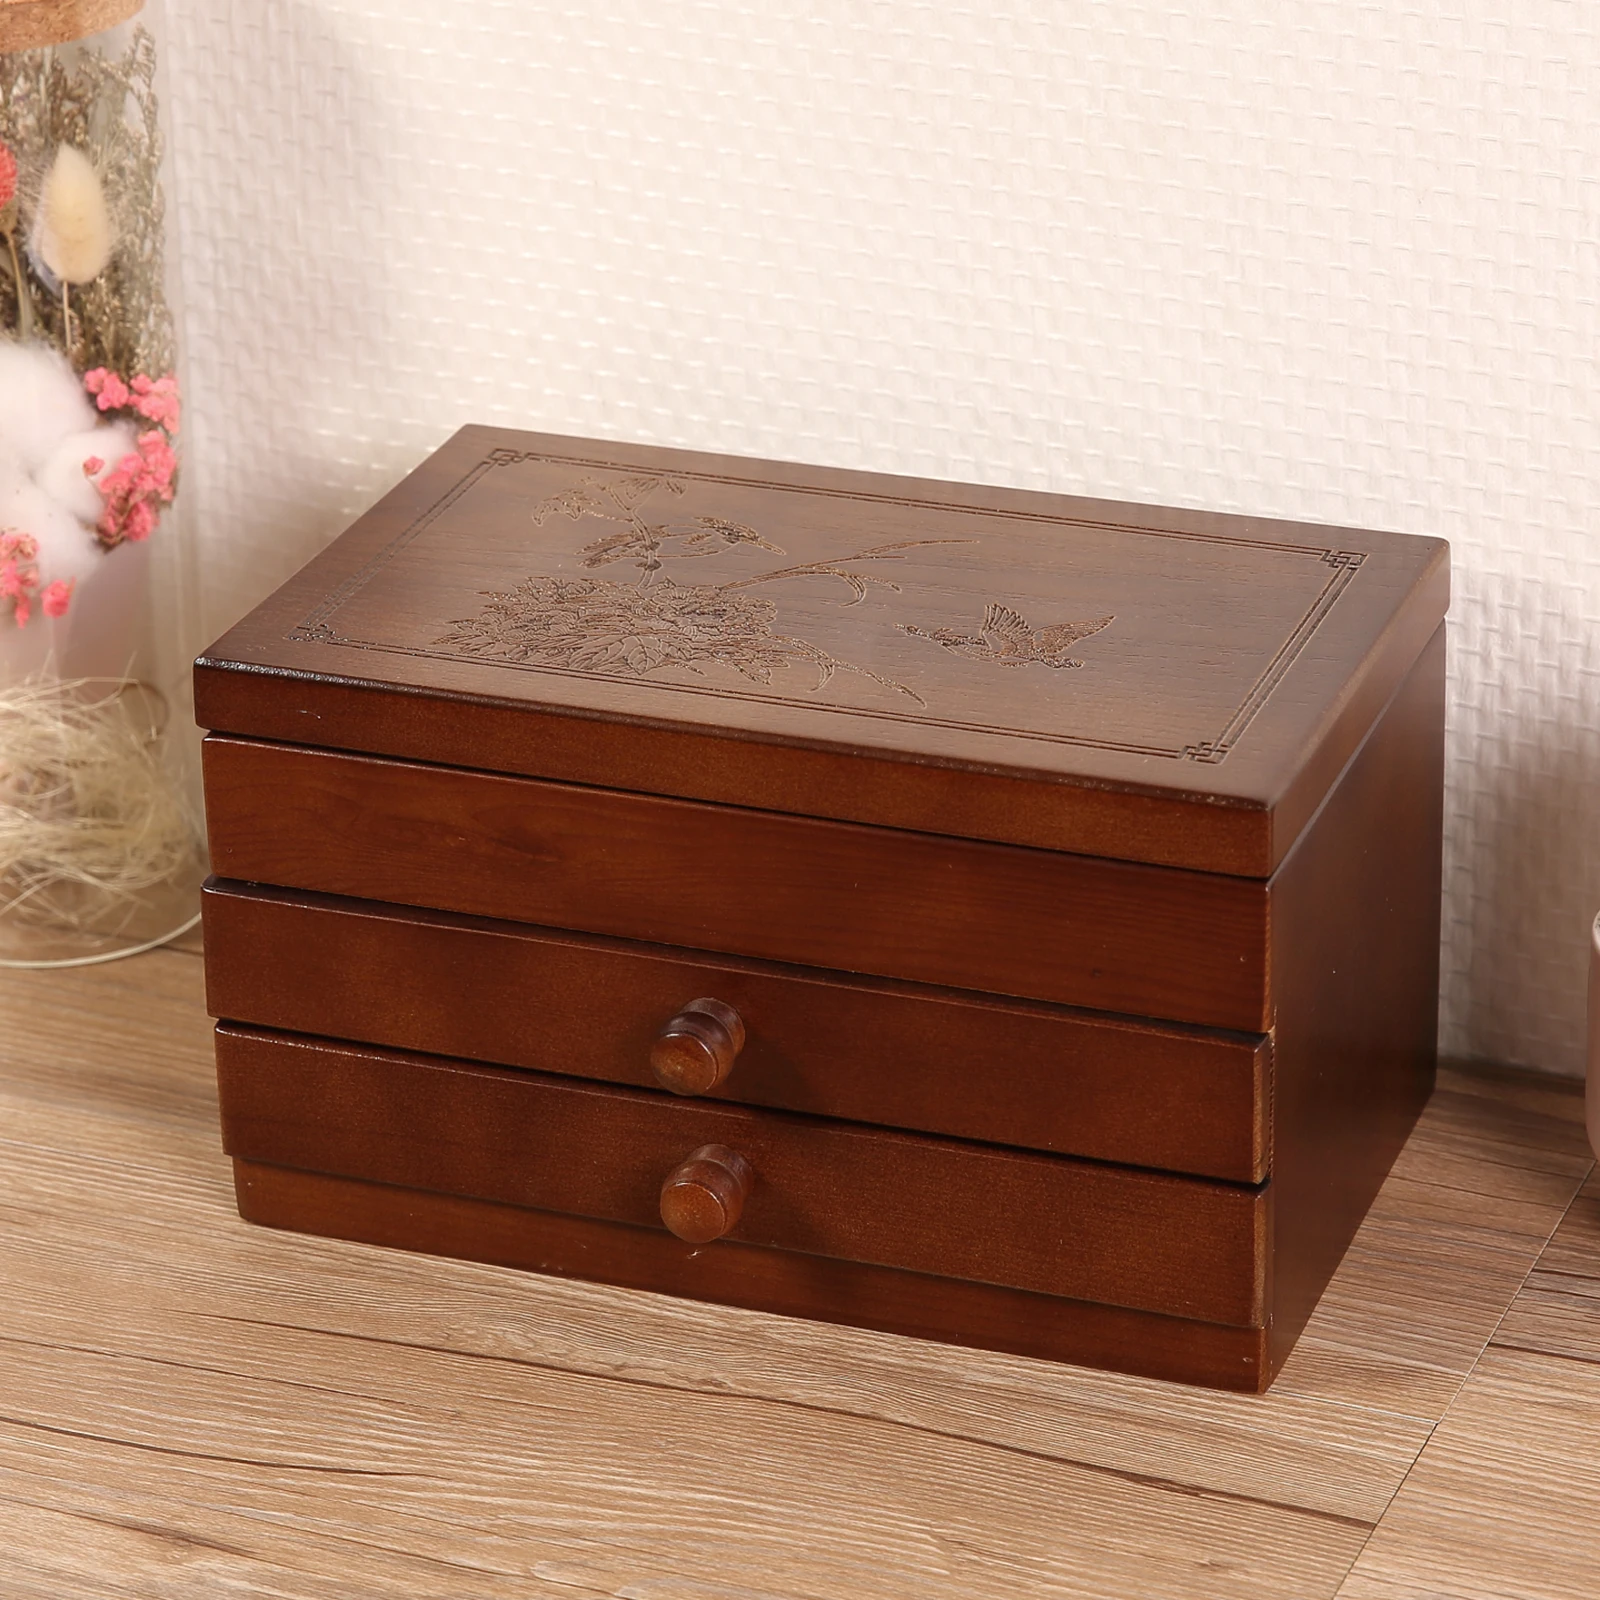 Wooden Jewelry Storage Box Watch Collection Organizer  for Women Gift